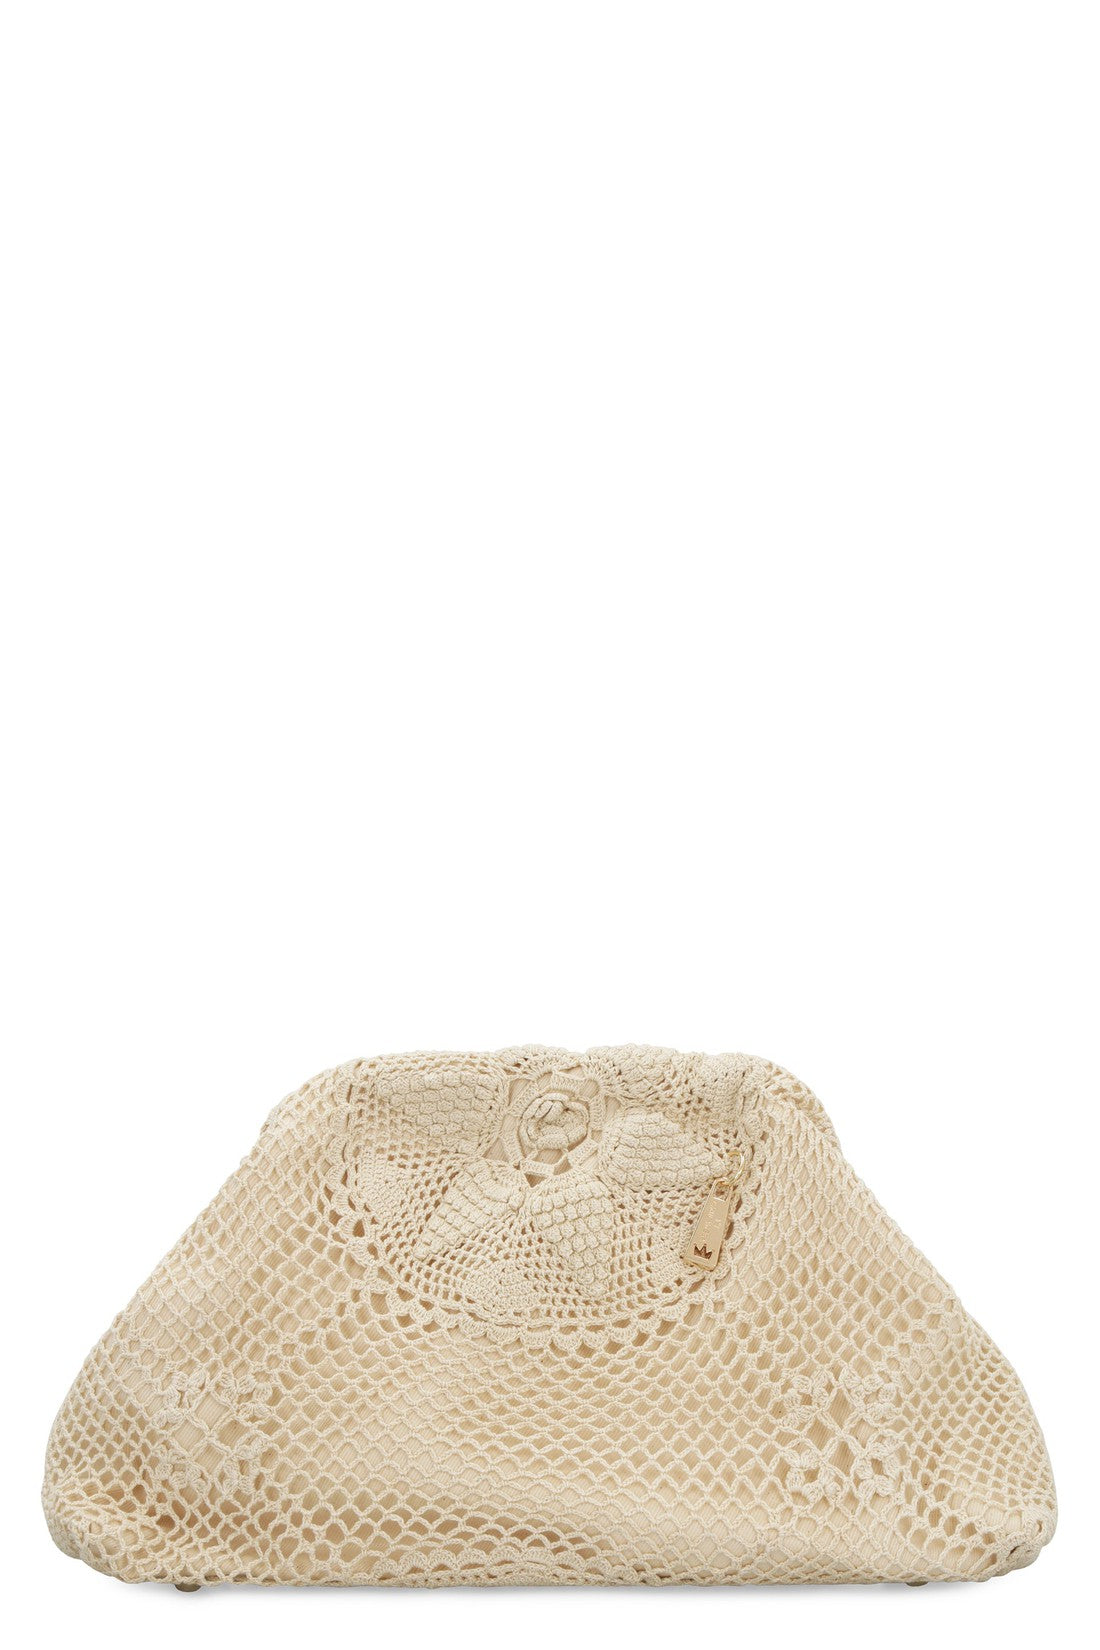 La Milanesa-OUTLET-SALE-Taormina crochet bag-ARCHIVIST